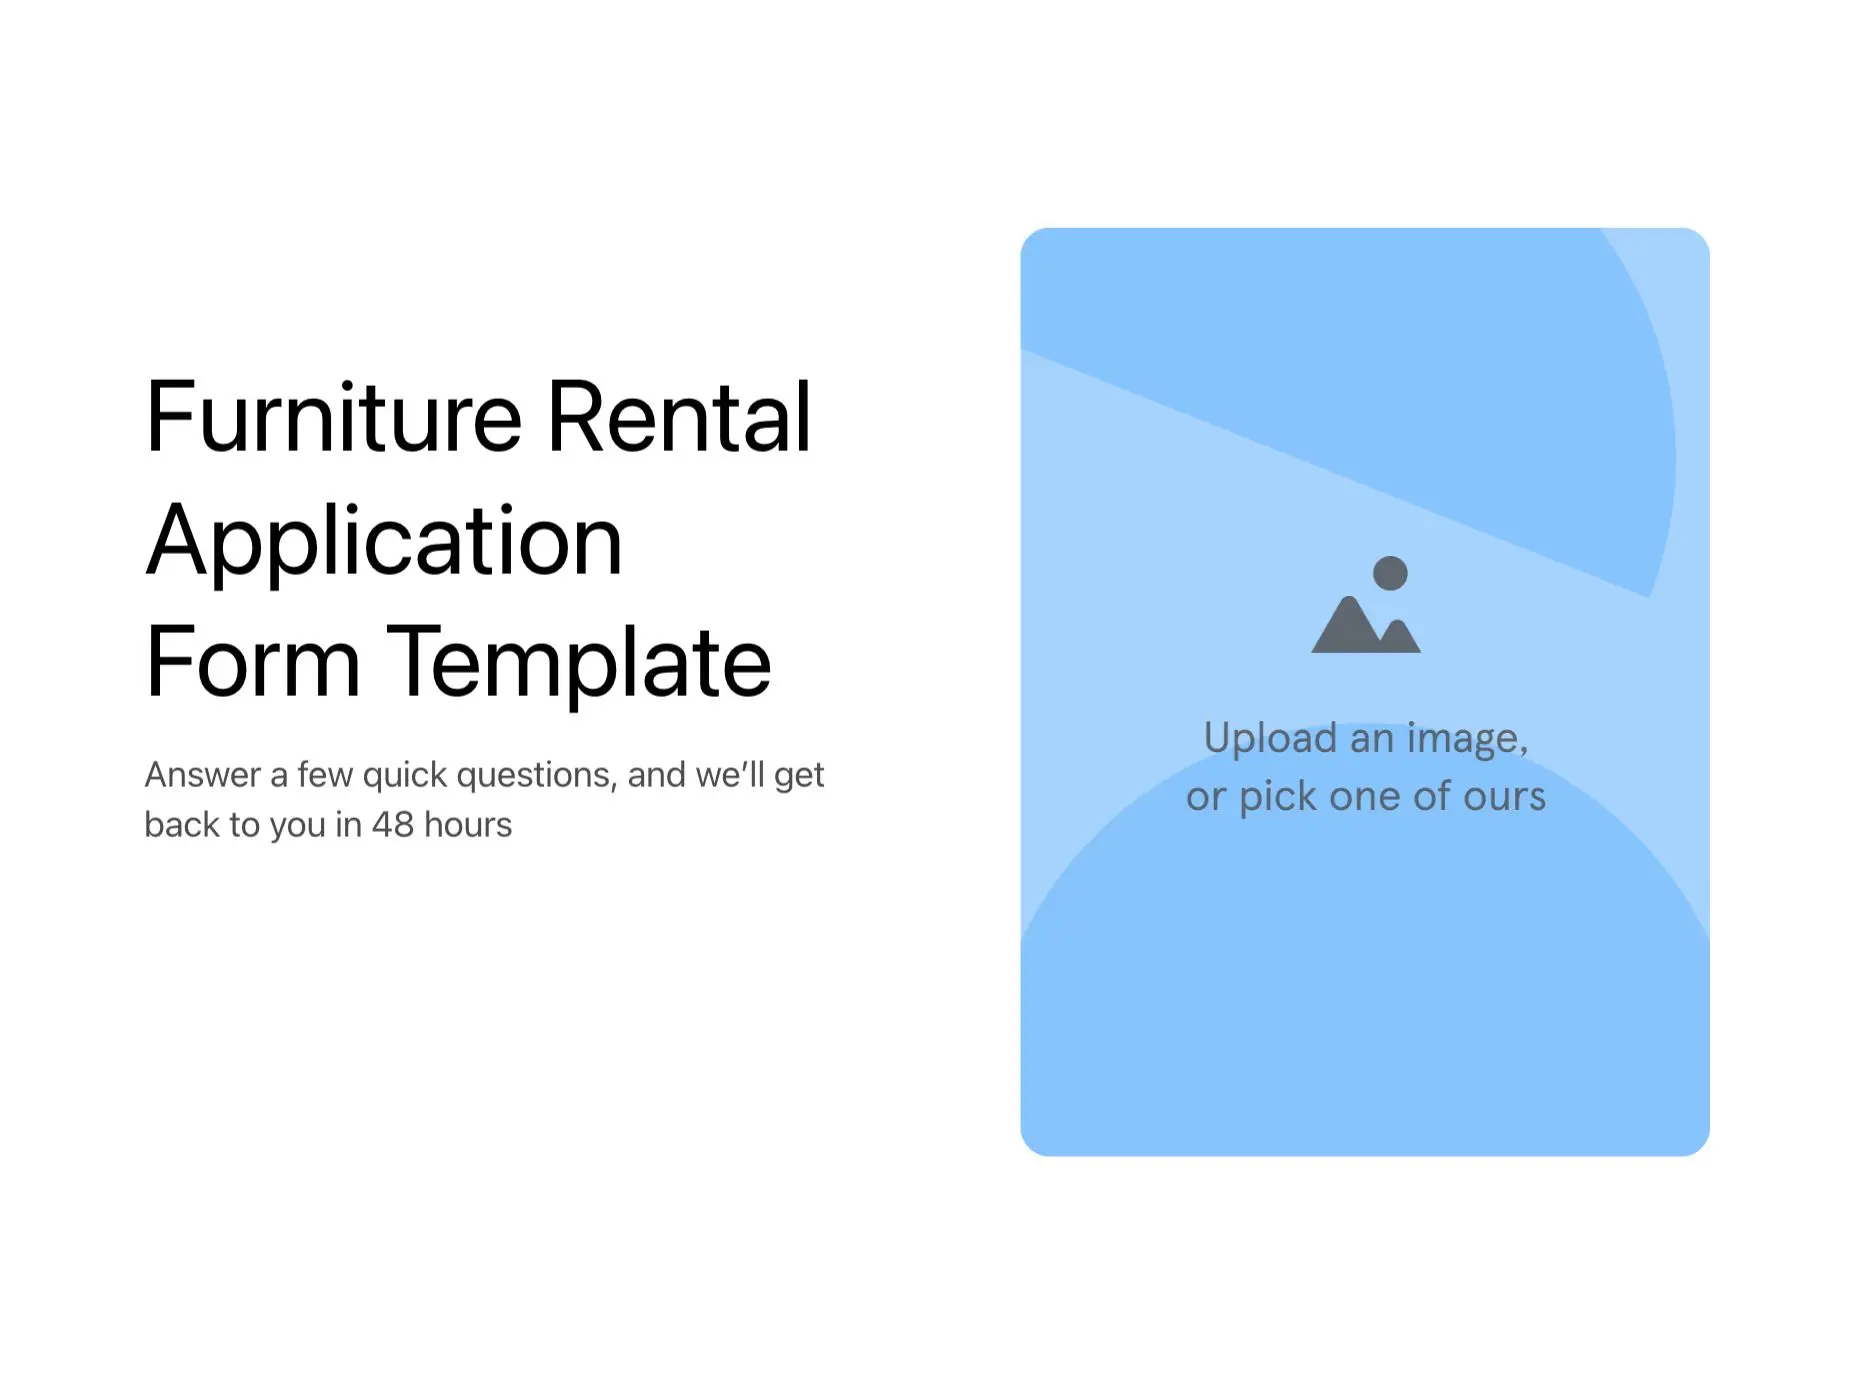 Furniture Rental Application Form Template Hero